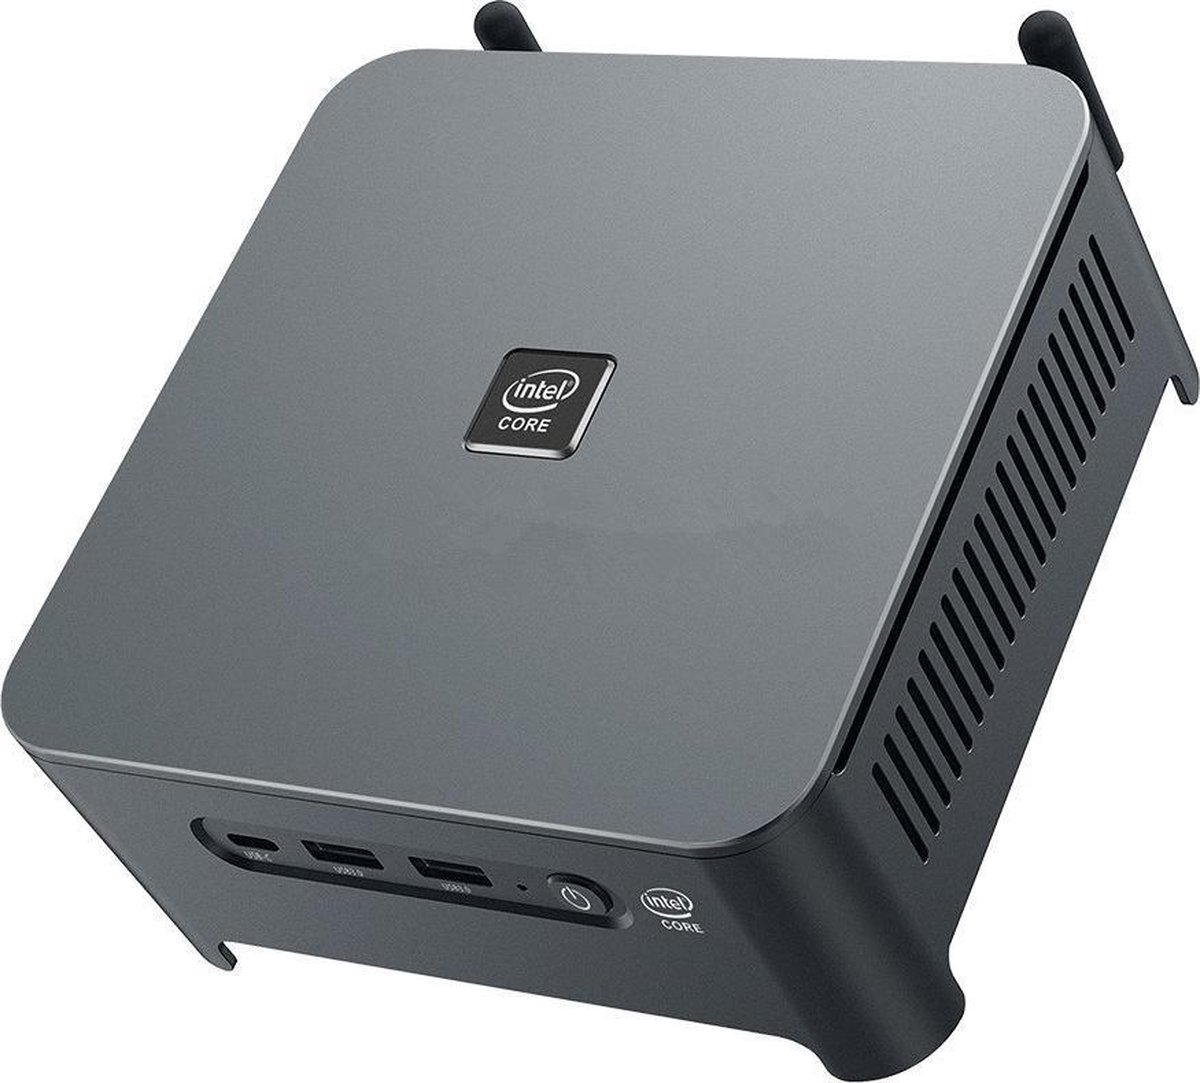 Elementkey iON - Mini PC - i7-10750H - 5 Ghz - Desktop Computer - 16GB RAM + 512GB NVME SSD + Windows 11 PRO - WiFi - Bluetooth - Alternatief voor NUC